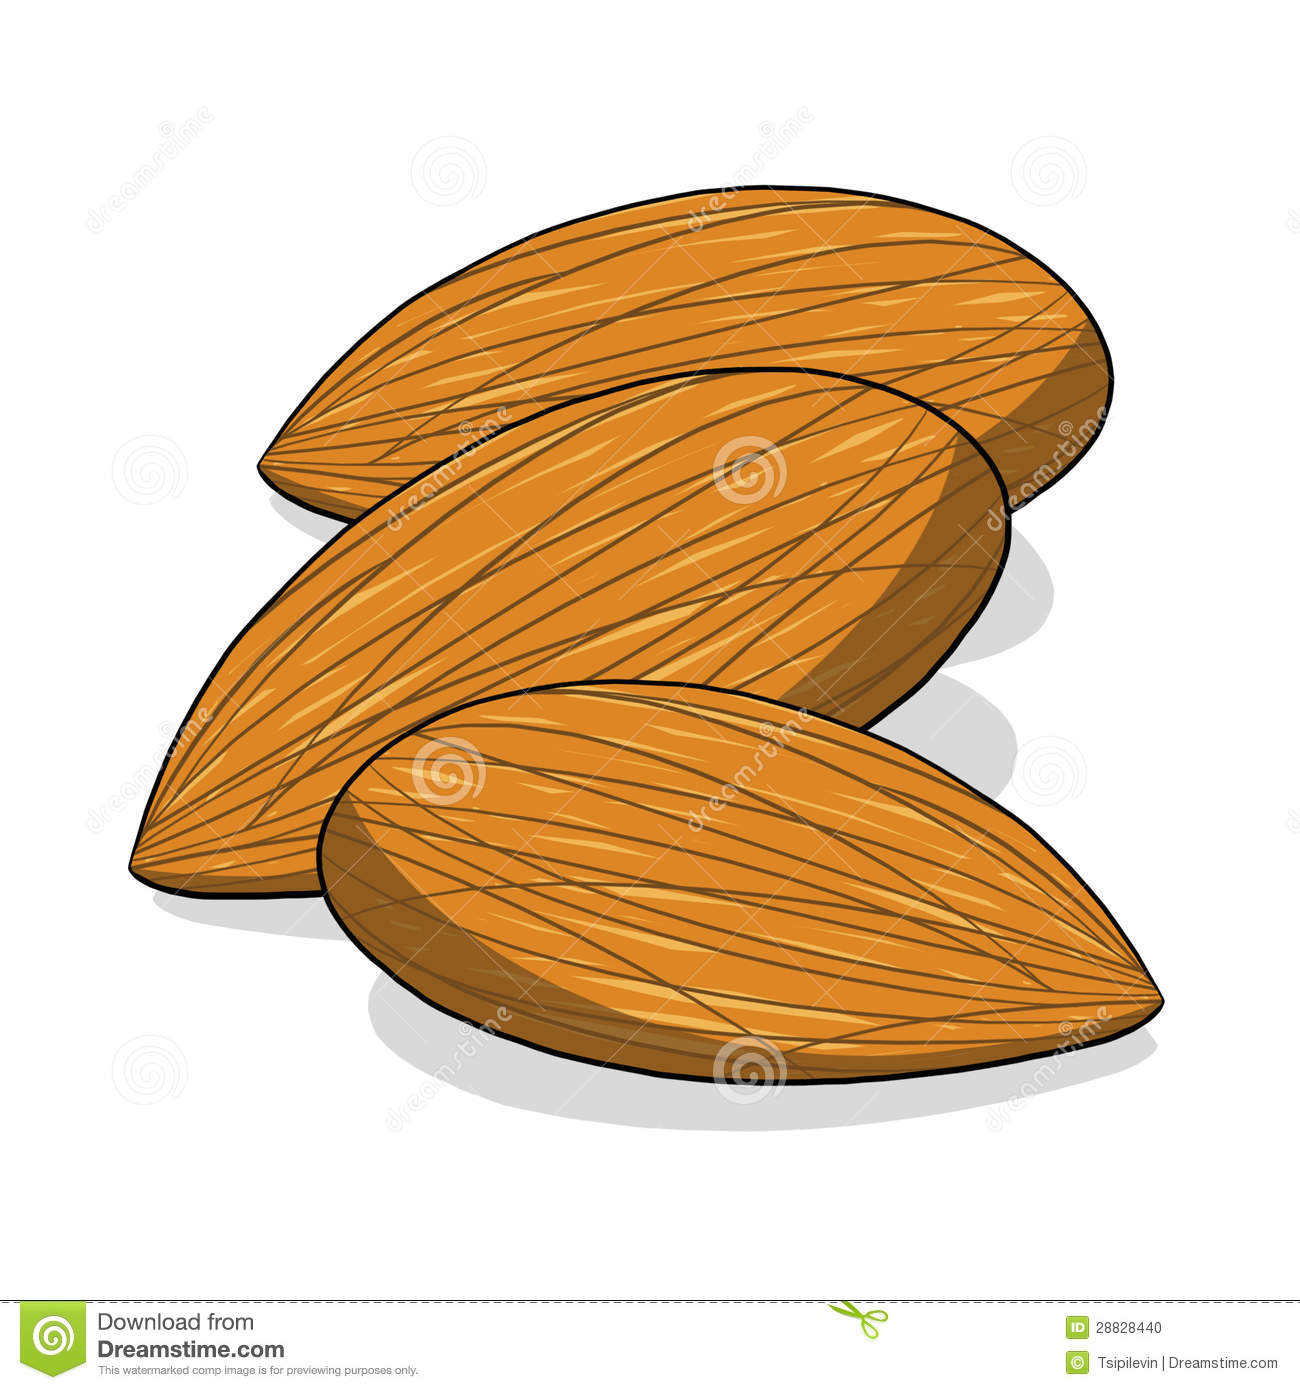 Almond Nuts Illustration Stock Photo   Image  28828440